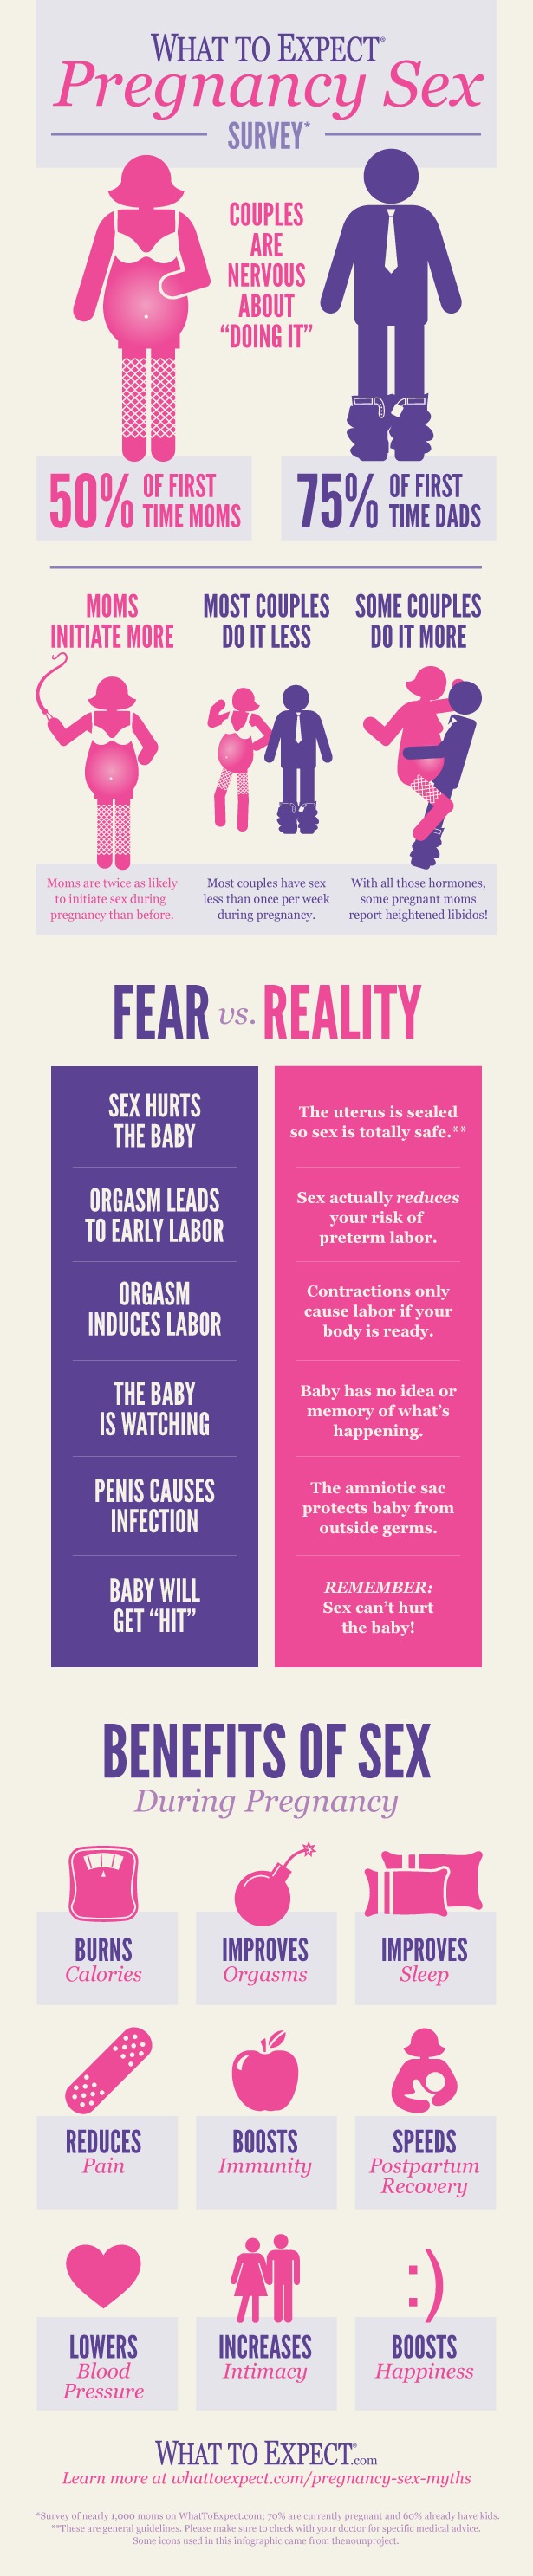 Sex During Pregnancy: A WhatToExpect.com Survey